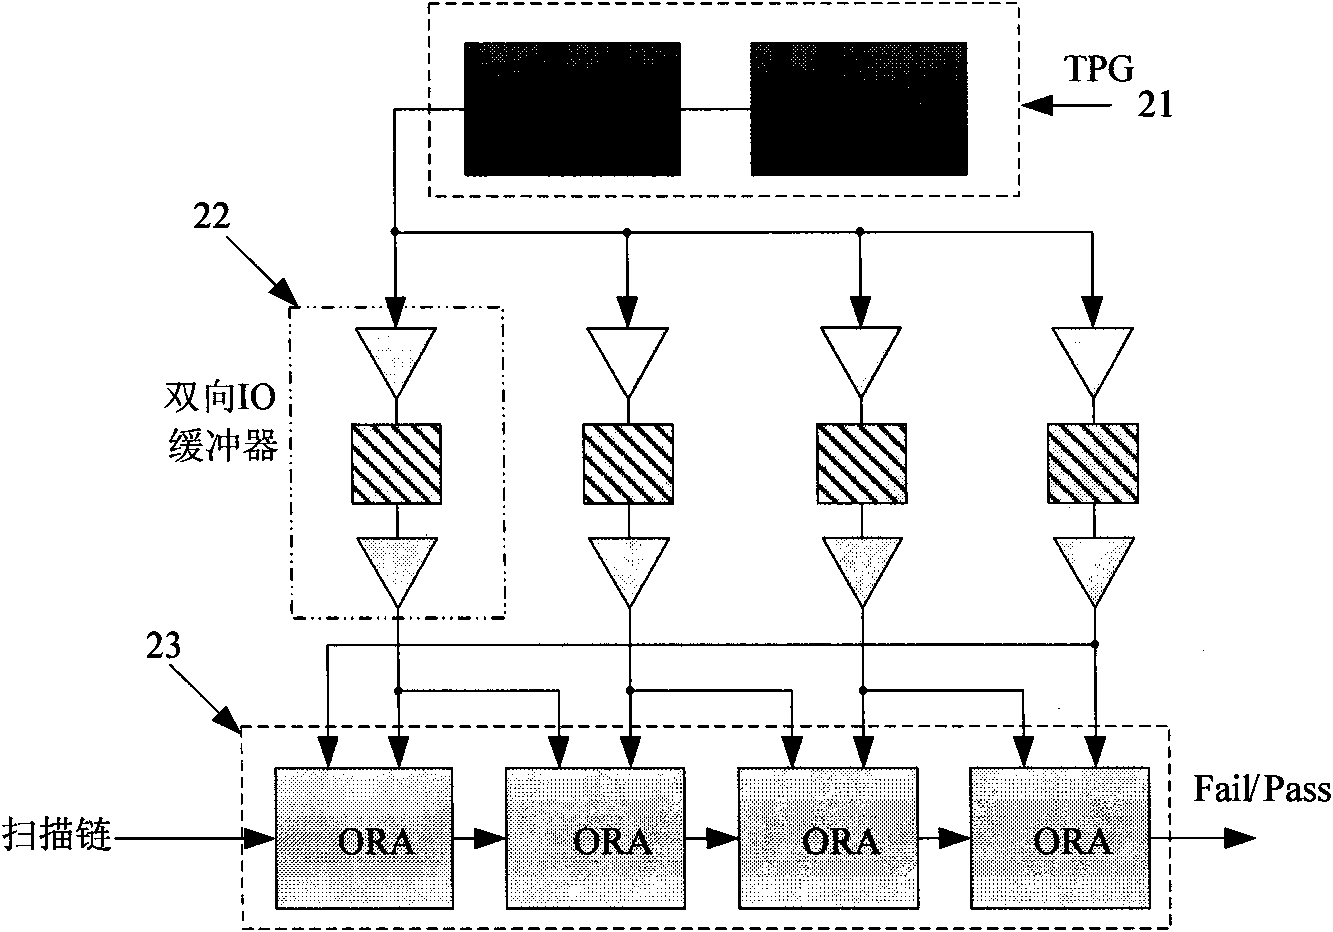 Built-in self-testing method of FPGA input/output module